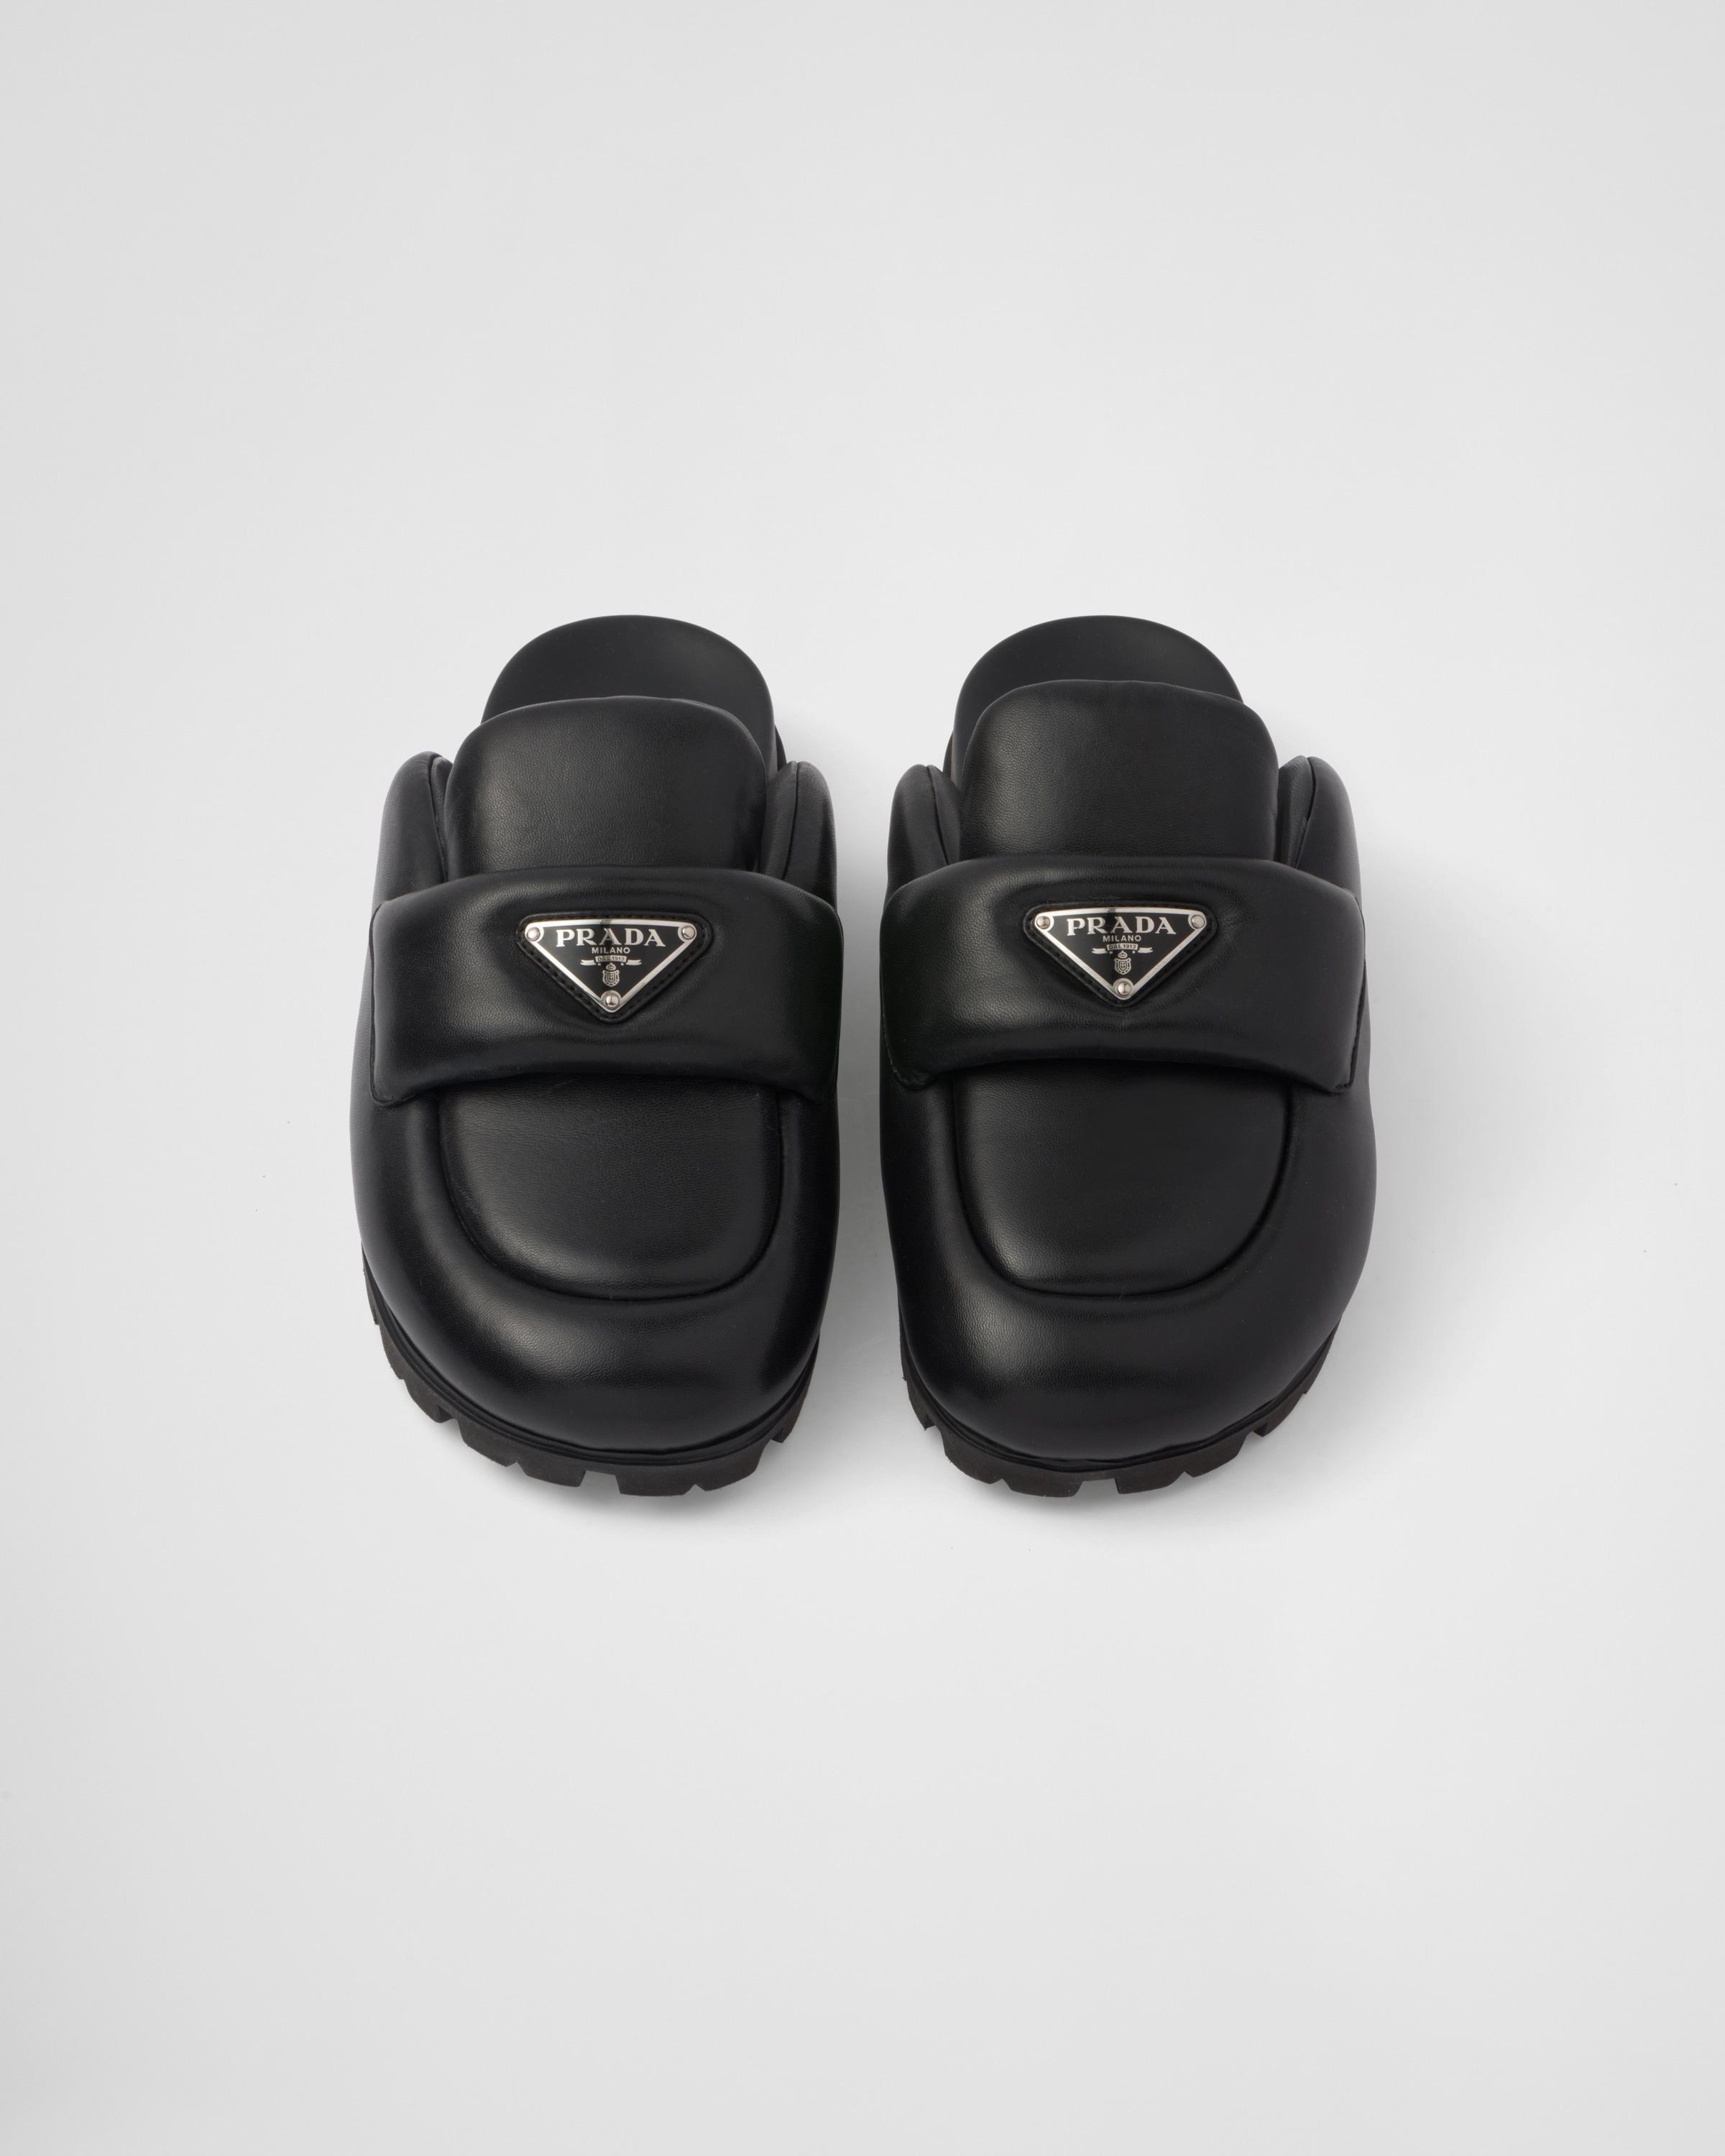 Prada Soft Padded Nappa Leather Sabots in Black | Lyst